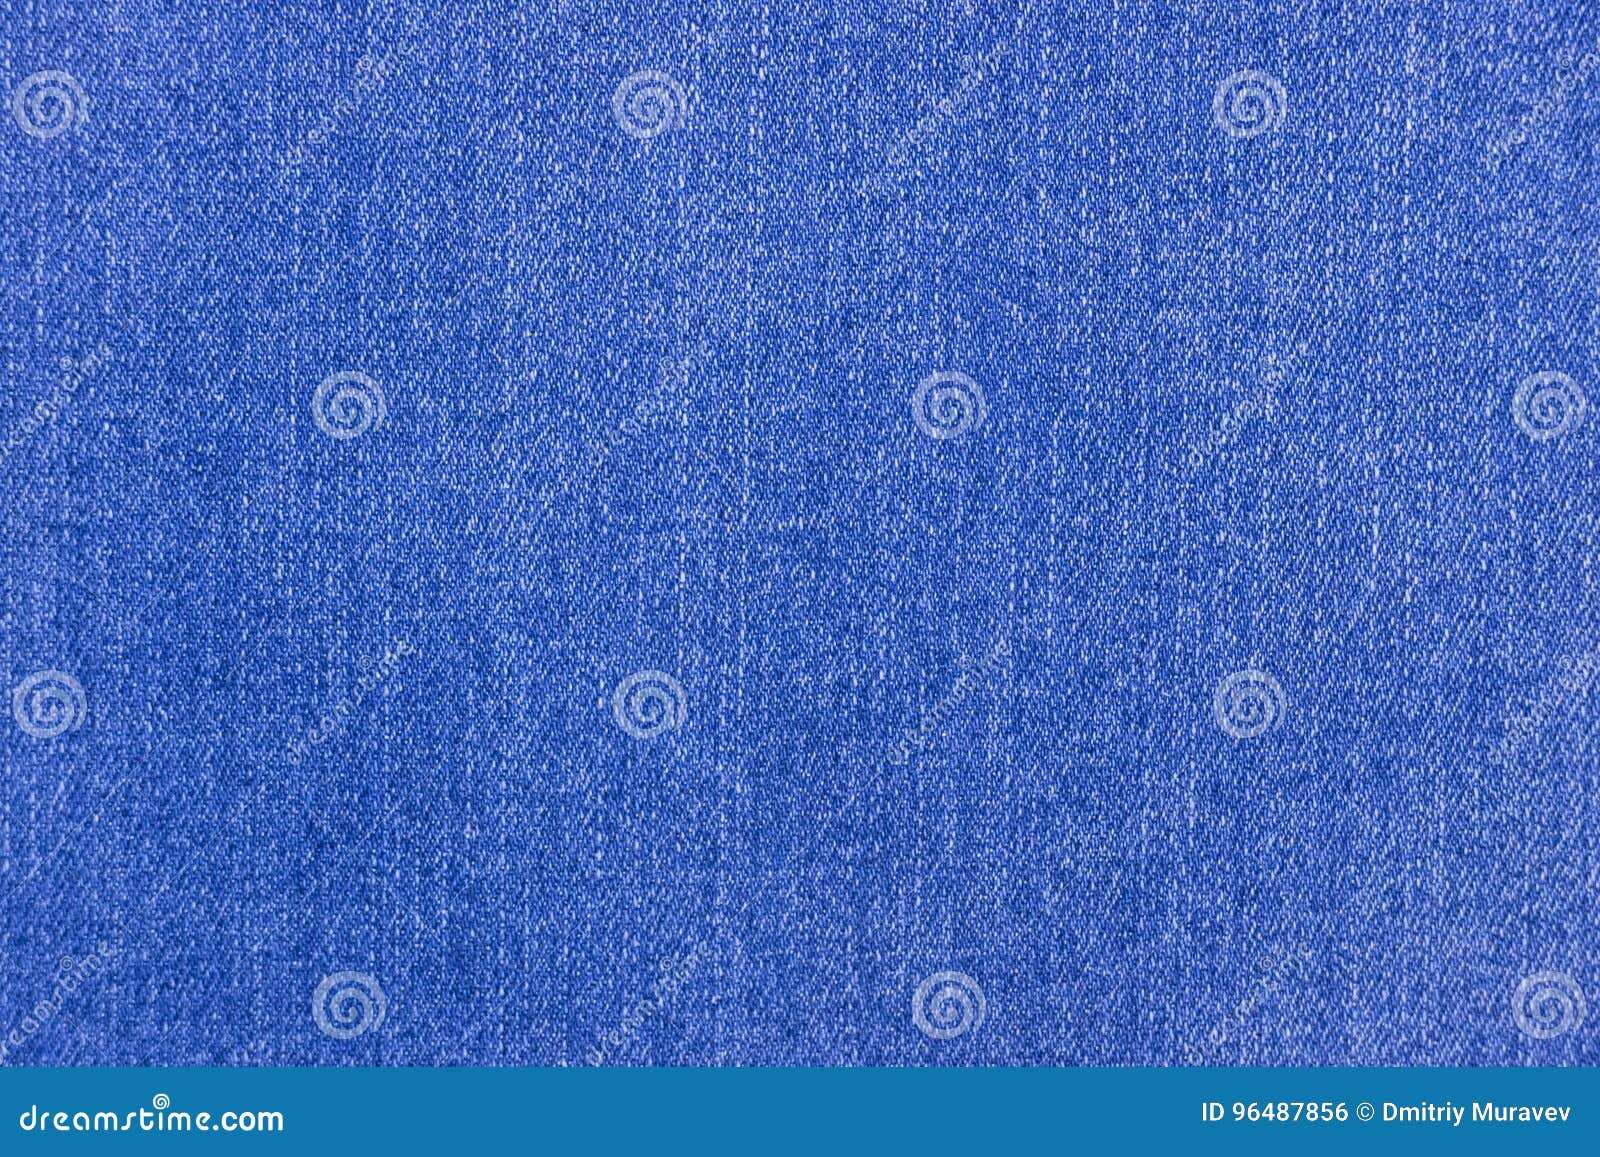 Dark Blue Jeans Texture. Natural Textile Denim Stock Photo - Image of ...